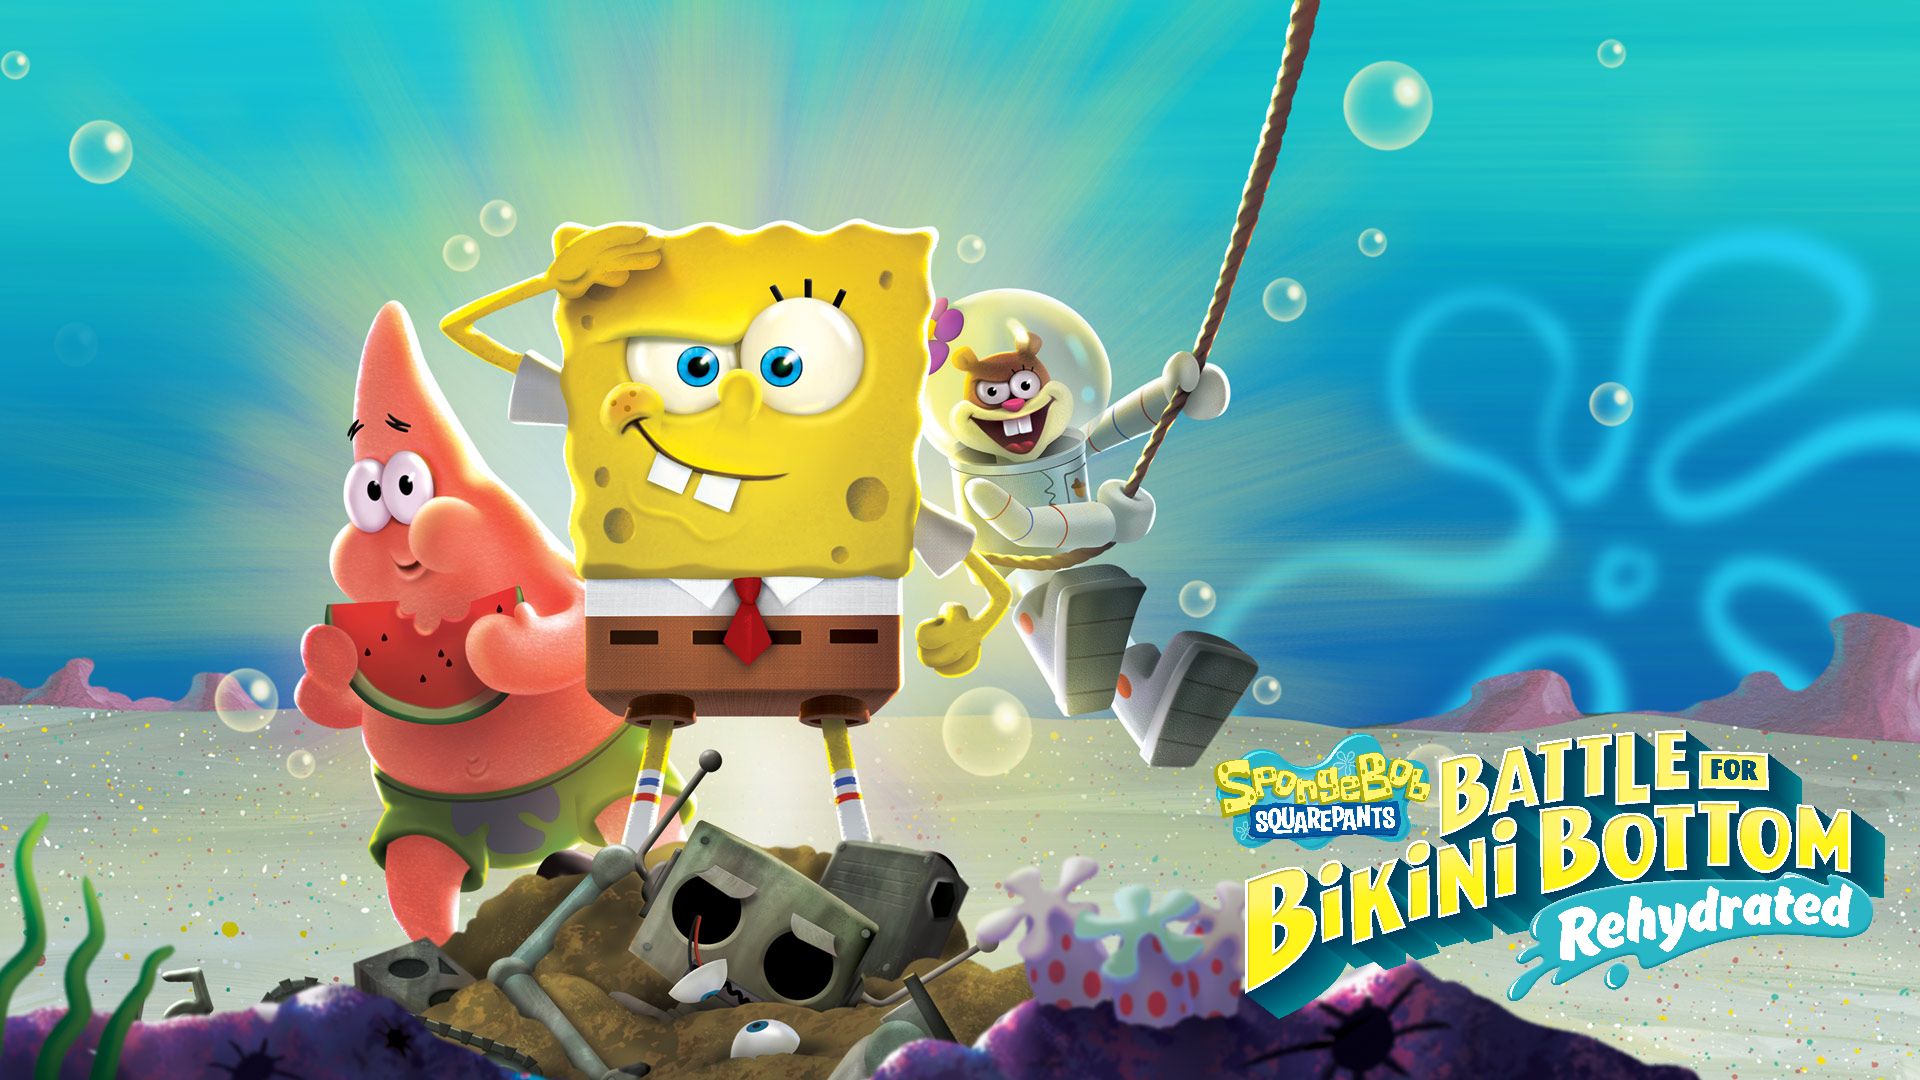 spongebob squarepants battle for bikini bottom rehydrated review 4358 big